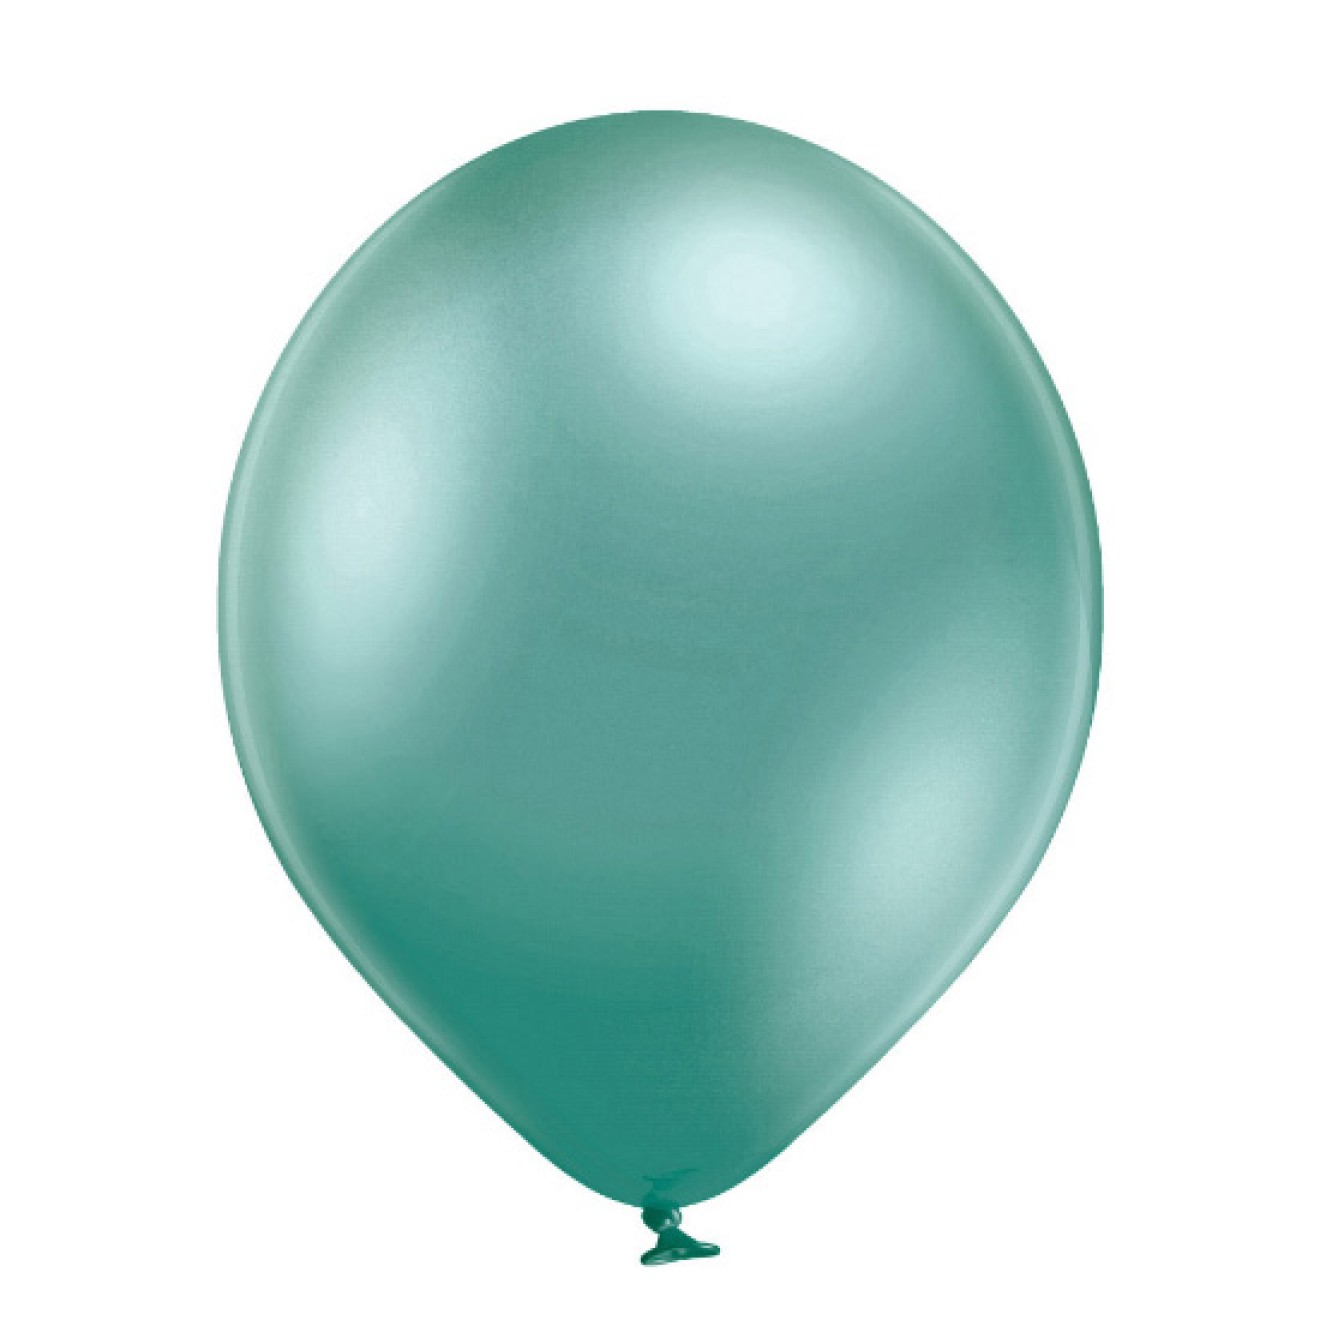 Luftballons Grün - Glossy (Chrome)